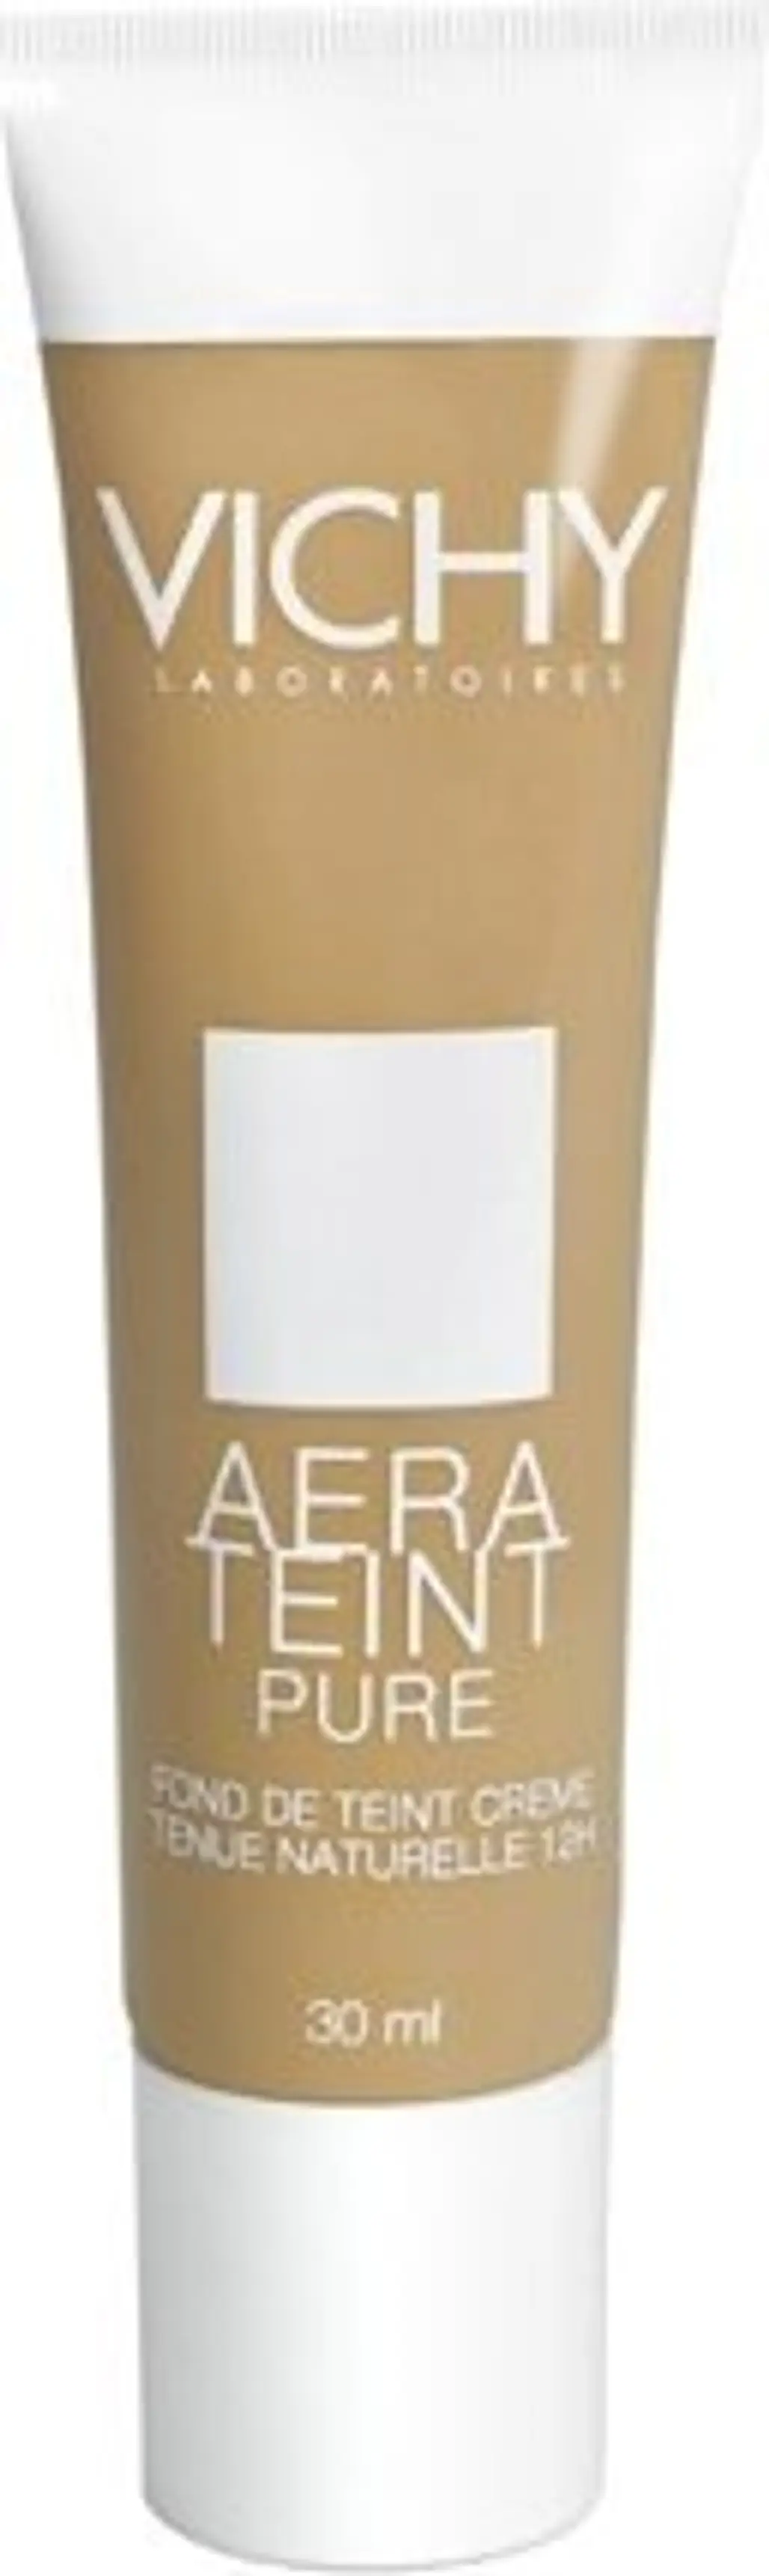 Vichy Aera Teint Pure Cream Foundation for Dry Skin